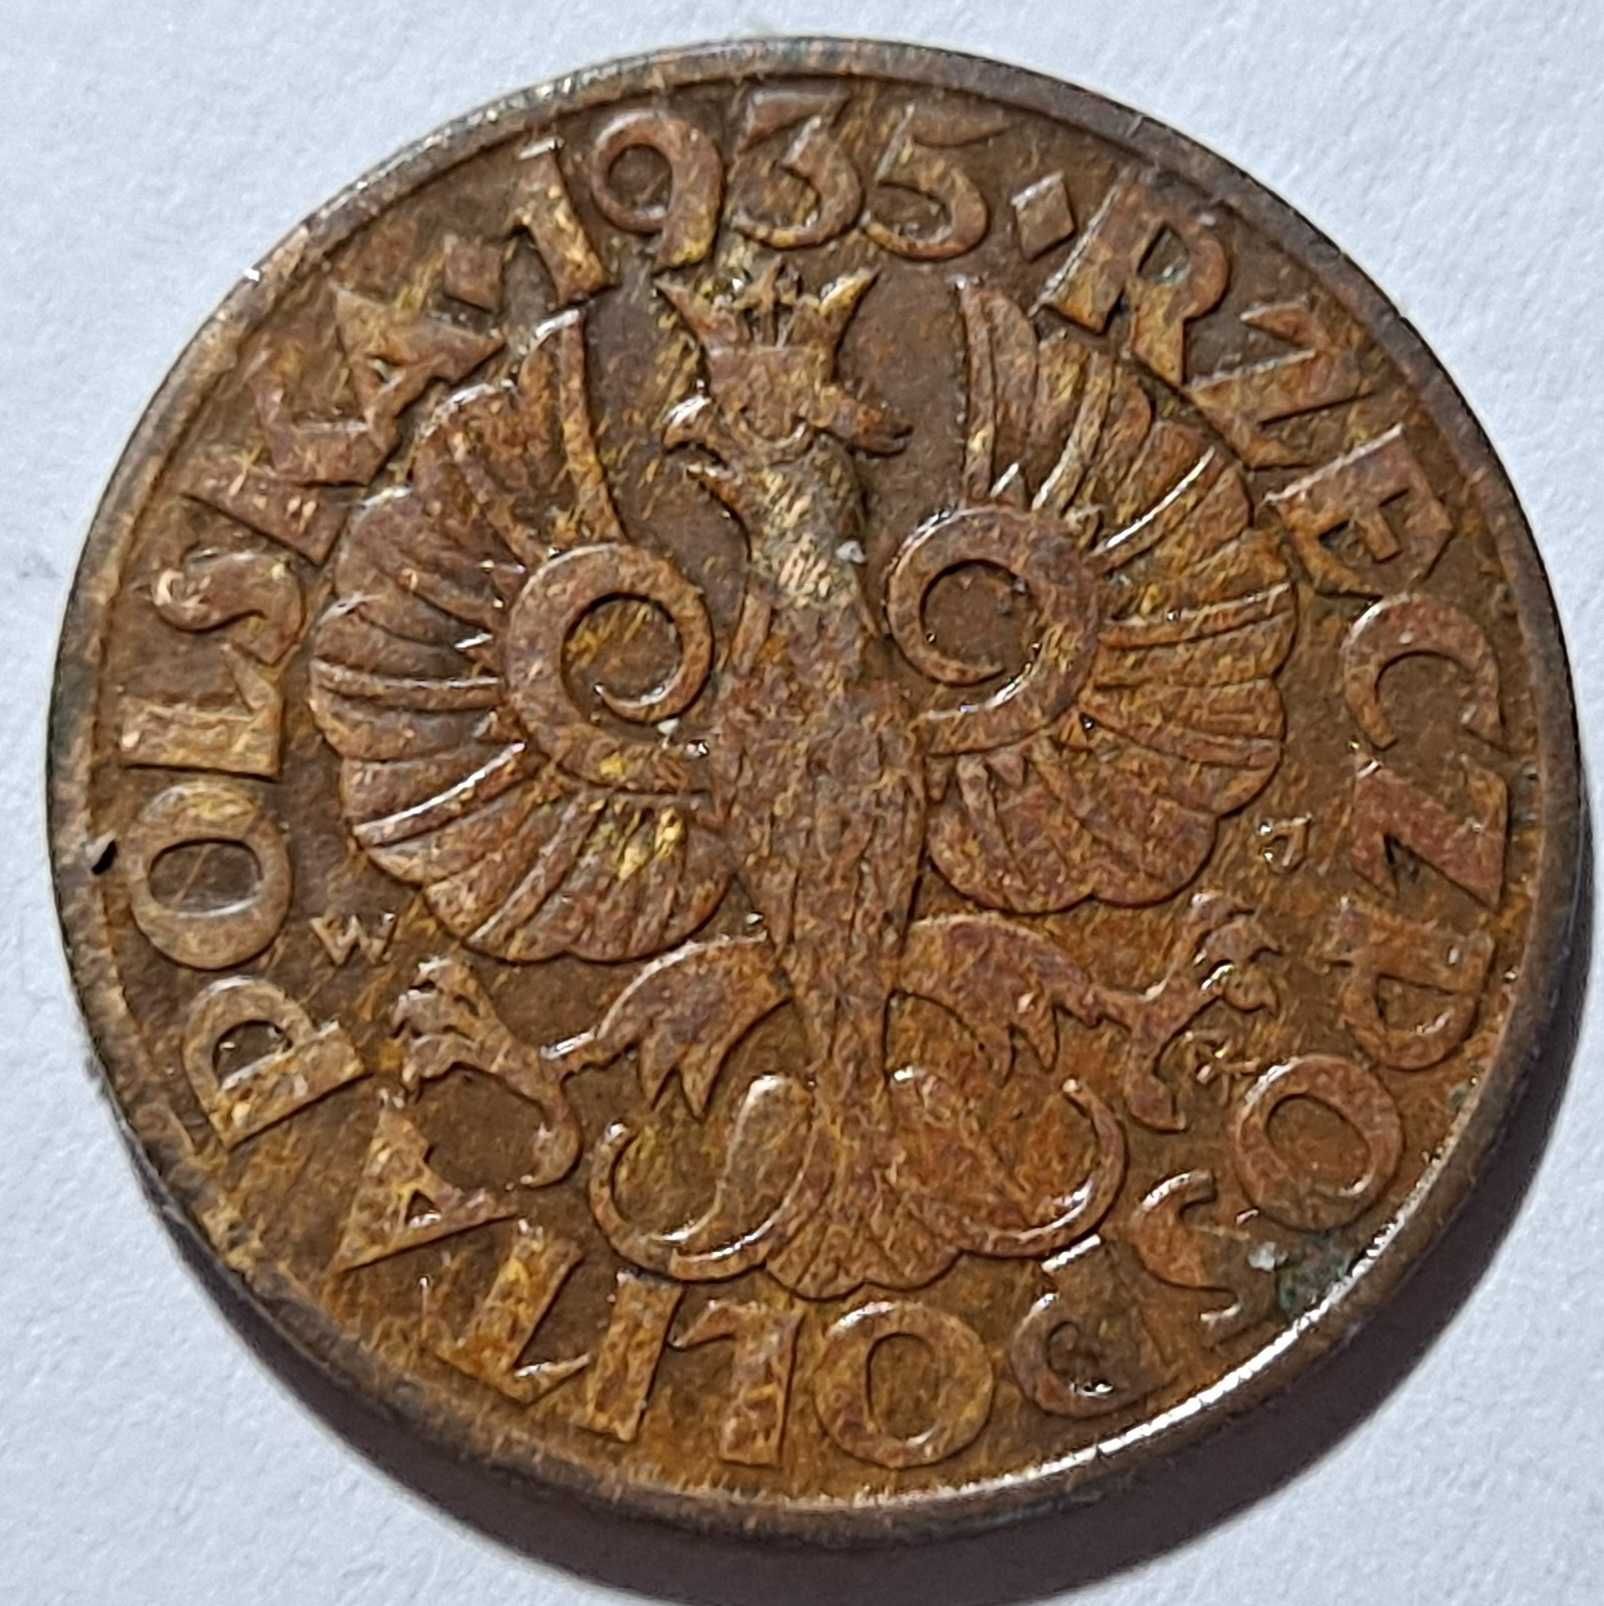 moneta - 5 Groszy - (Polska) II Rzeczpospolita - 1935 r.